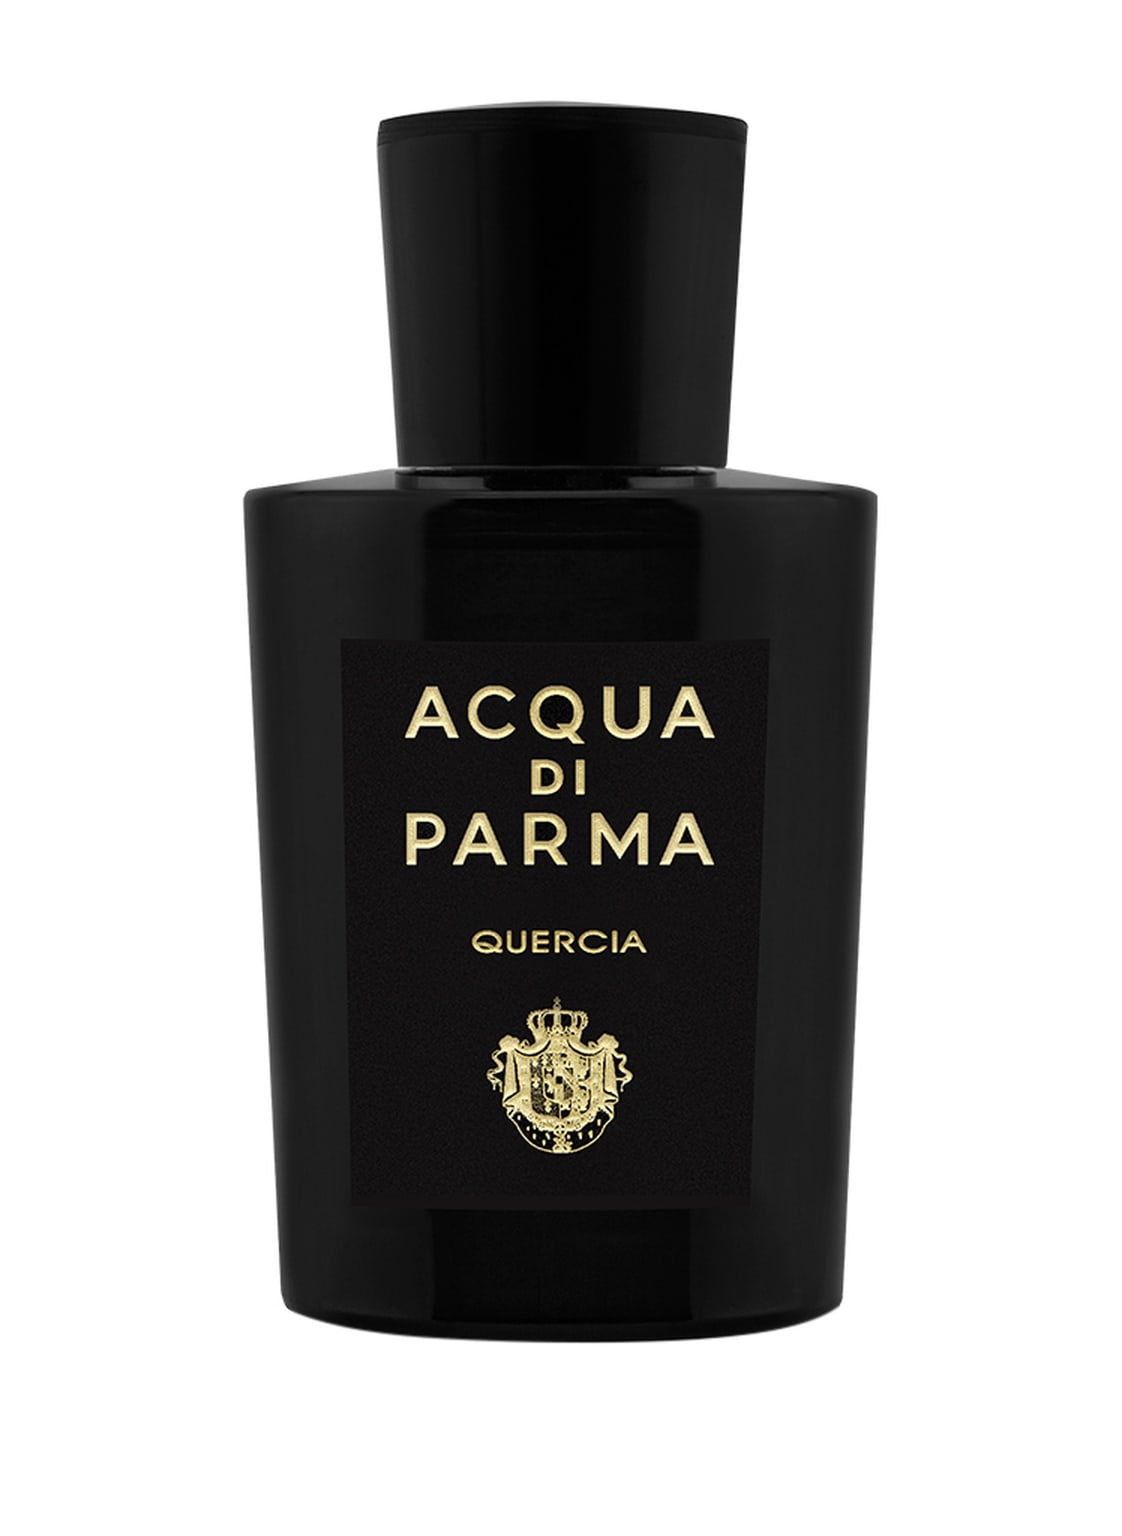 Acqua Di Parma Quercia Eau de Parfum 100 ml von Acqua Di Parma